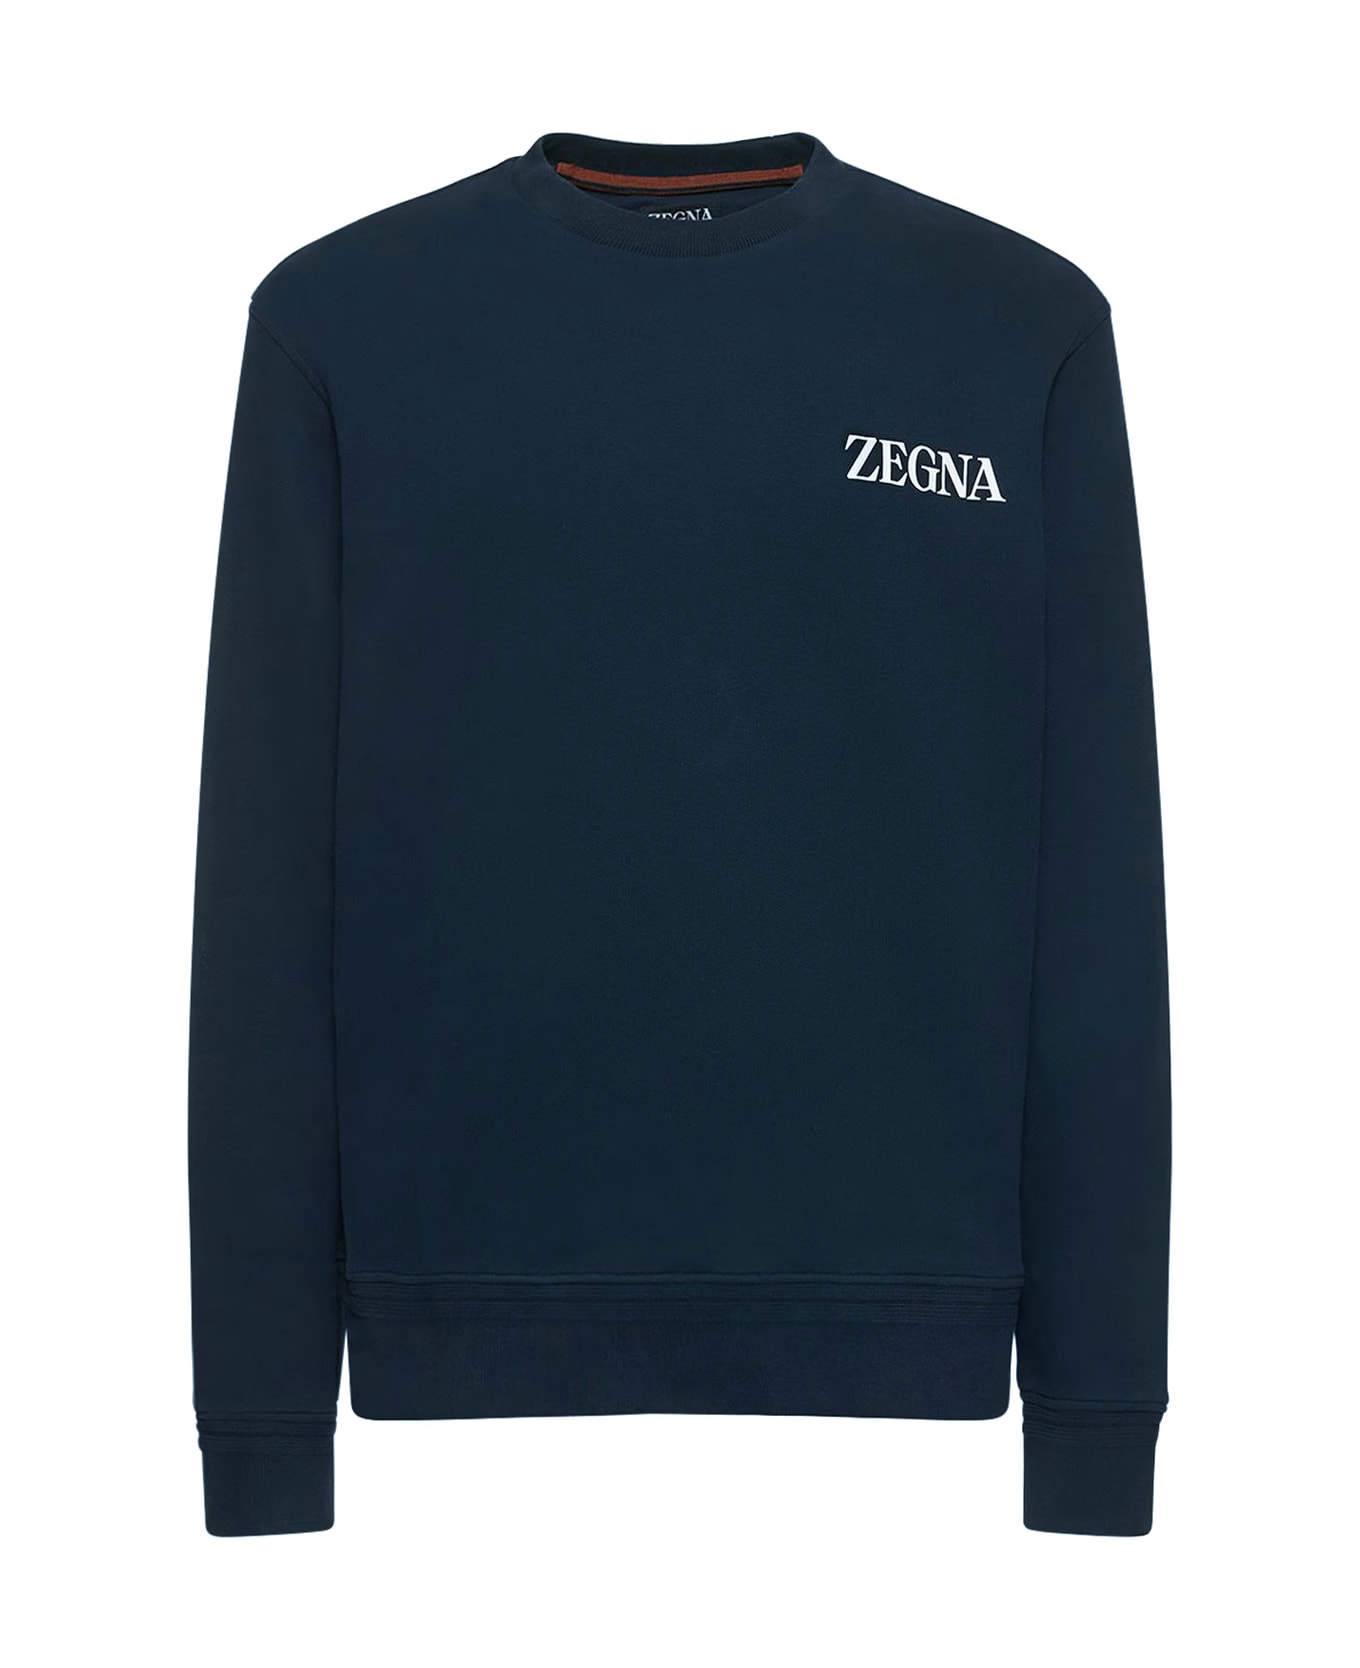 Zegna #usetheexisting Sweatshirt - NAVY フリース